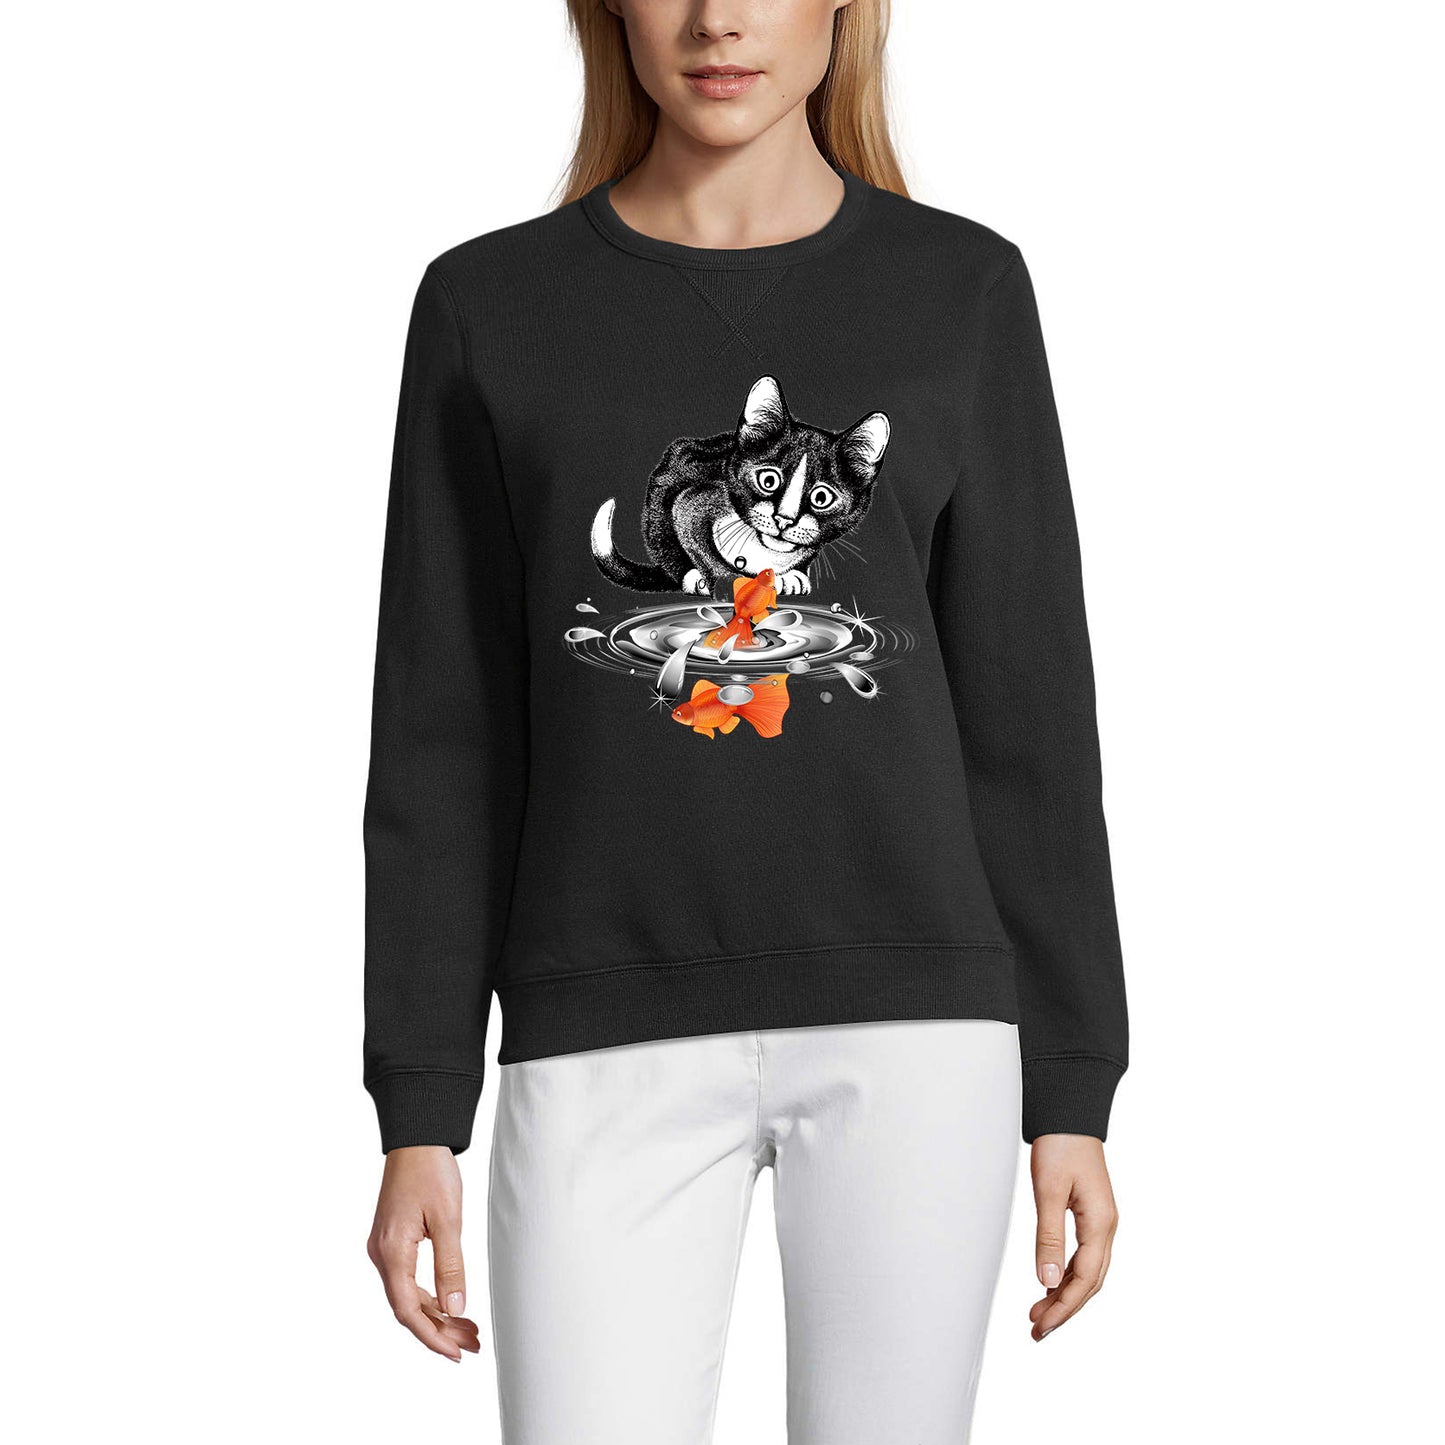 ULTRABASIC Women's Sweatshirt Cat and Fish - Kitten Funny Sweater for Ladies